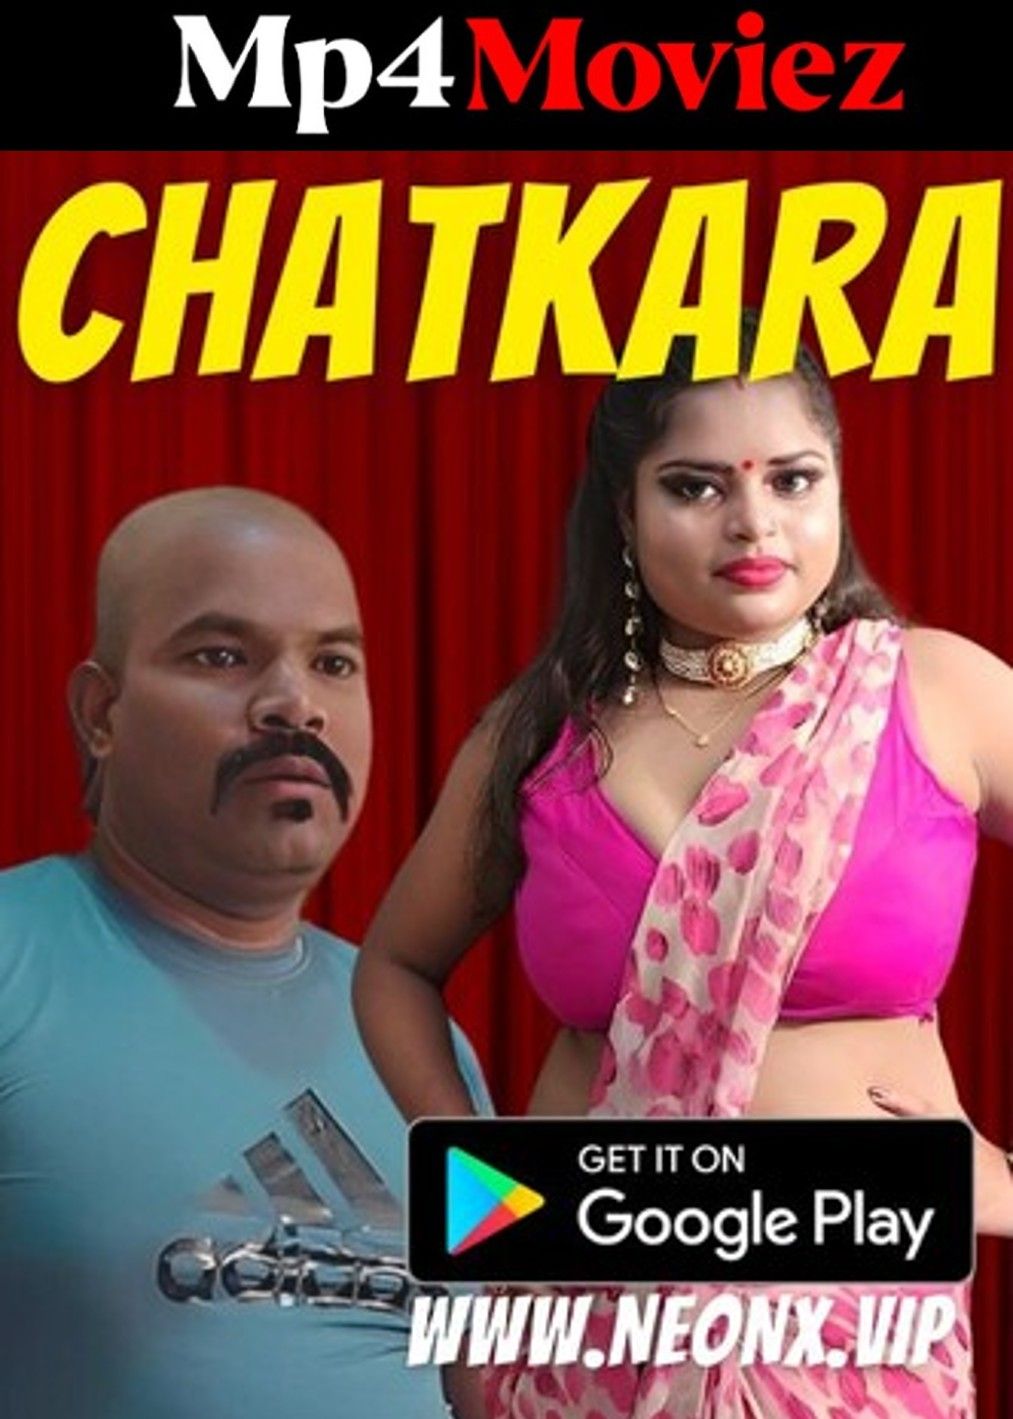 Chatkara (2023) Hindi NeonX Short Film download full movie